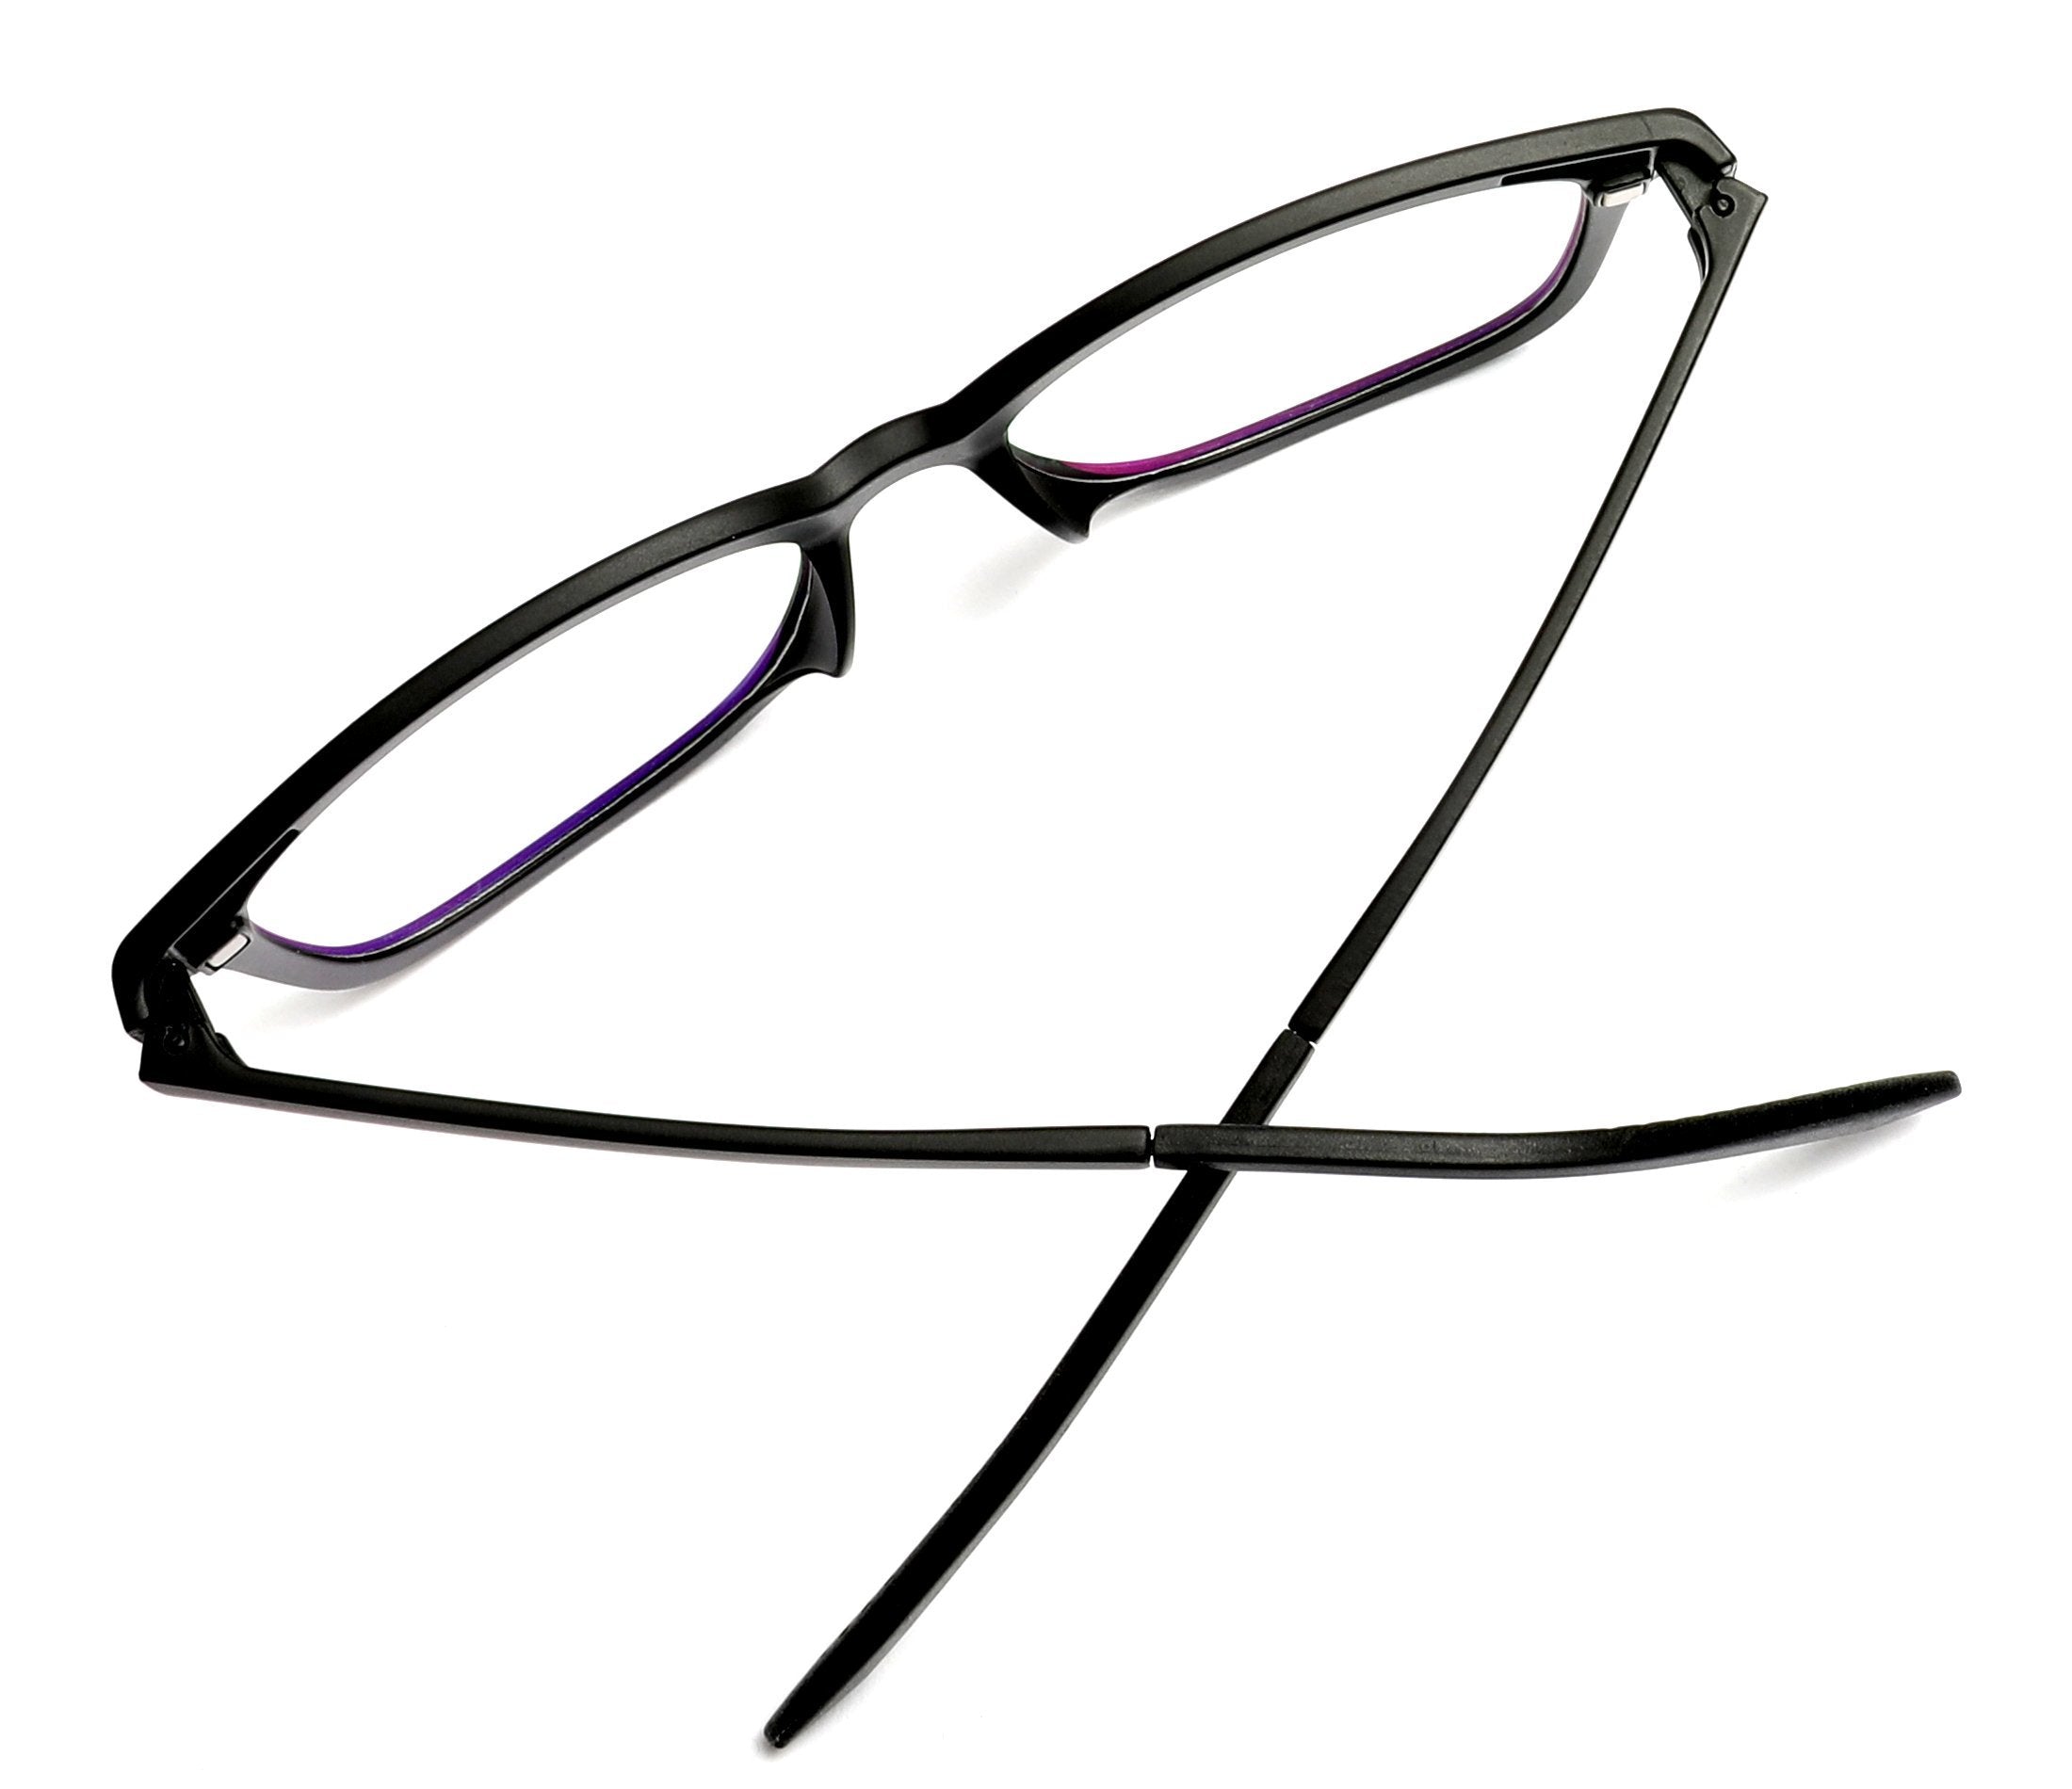 Blue Blockers Computer Screen Glasses Anti Glare and Anti Scratch Break Resistant High Flexibility TR90 Black-Samba Shades